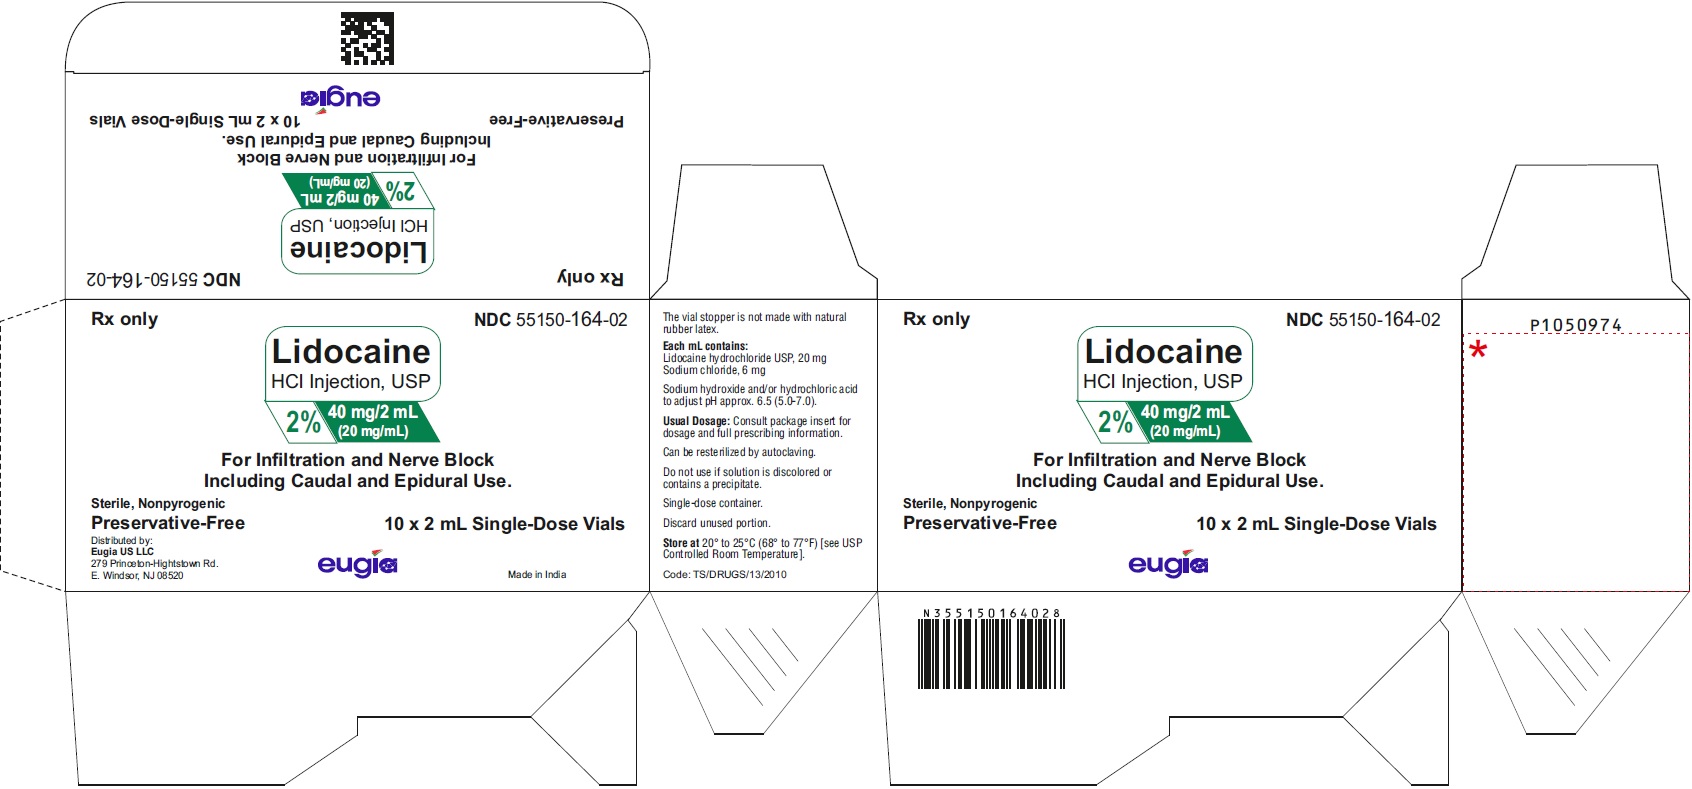 PACKAGE LABEL-PRINCIPAL DISPLAY PANEL - 2% 40 mg/2 mL (20 mg/mL) - 2 mL Container-Carton [10 Vials]